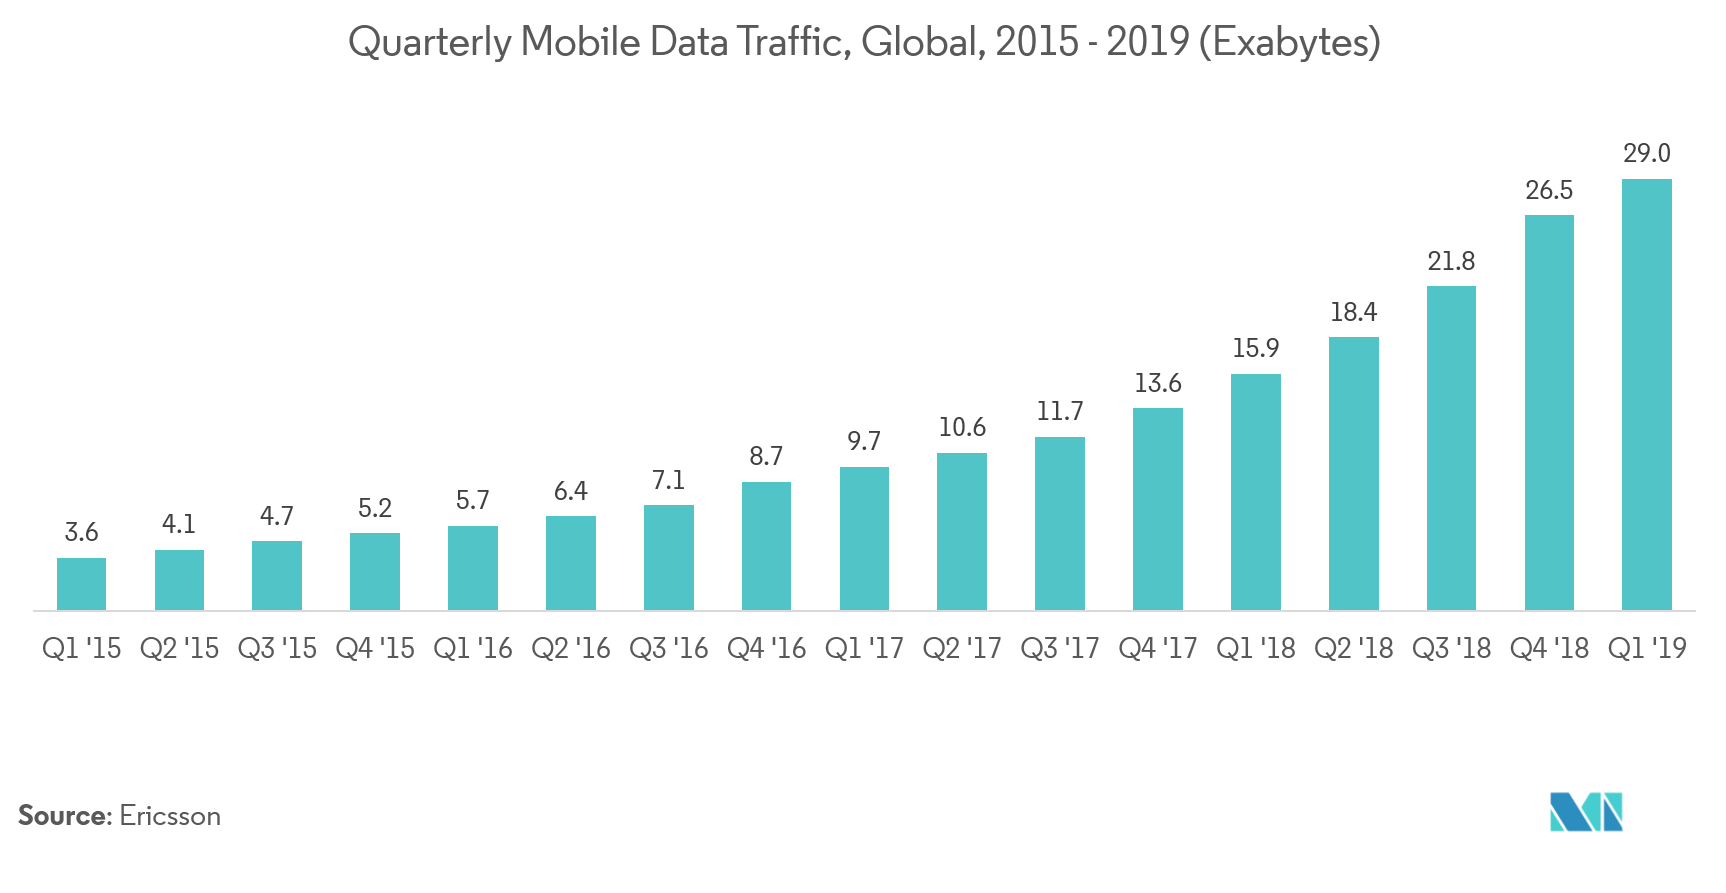 Tag Management System Market - Quarterly Mobile Data Traffic, Global, 2015 - 2019 (Exabytes)